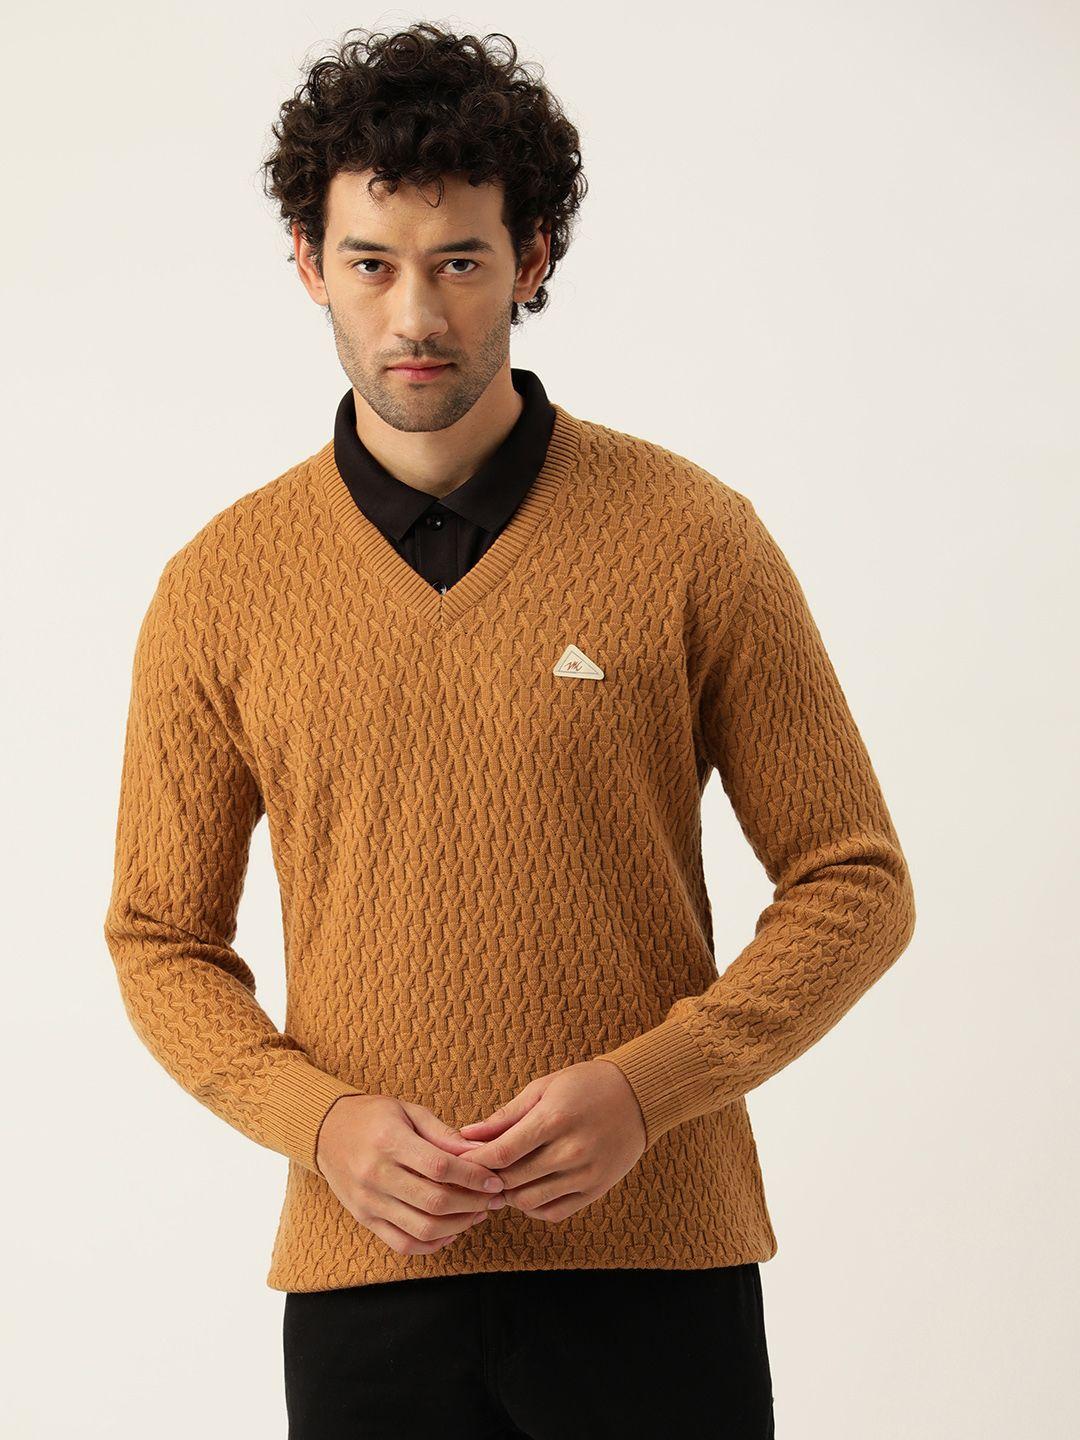 monte carlo self designed woollen pullover